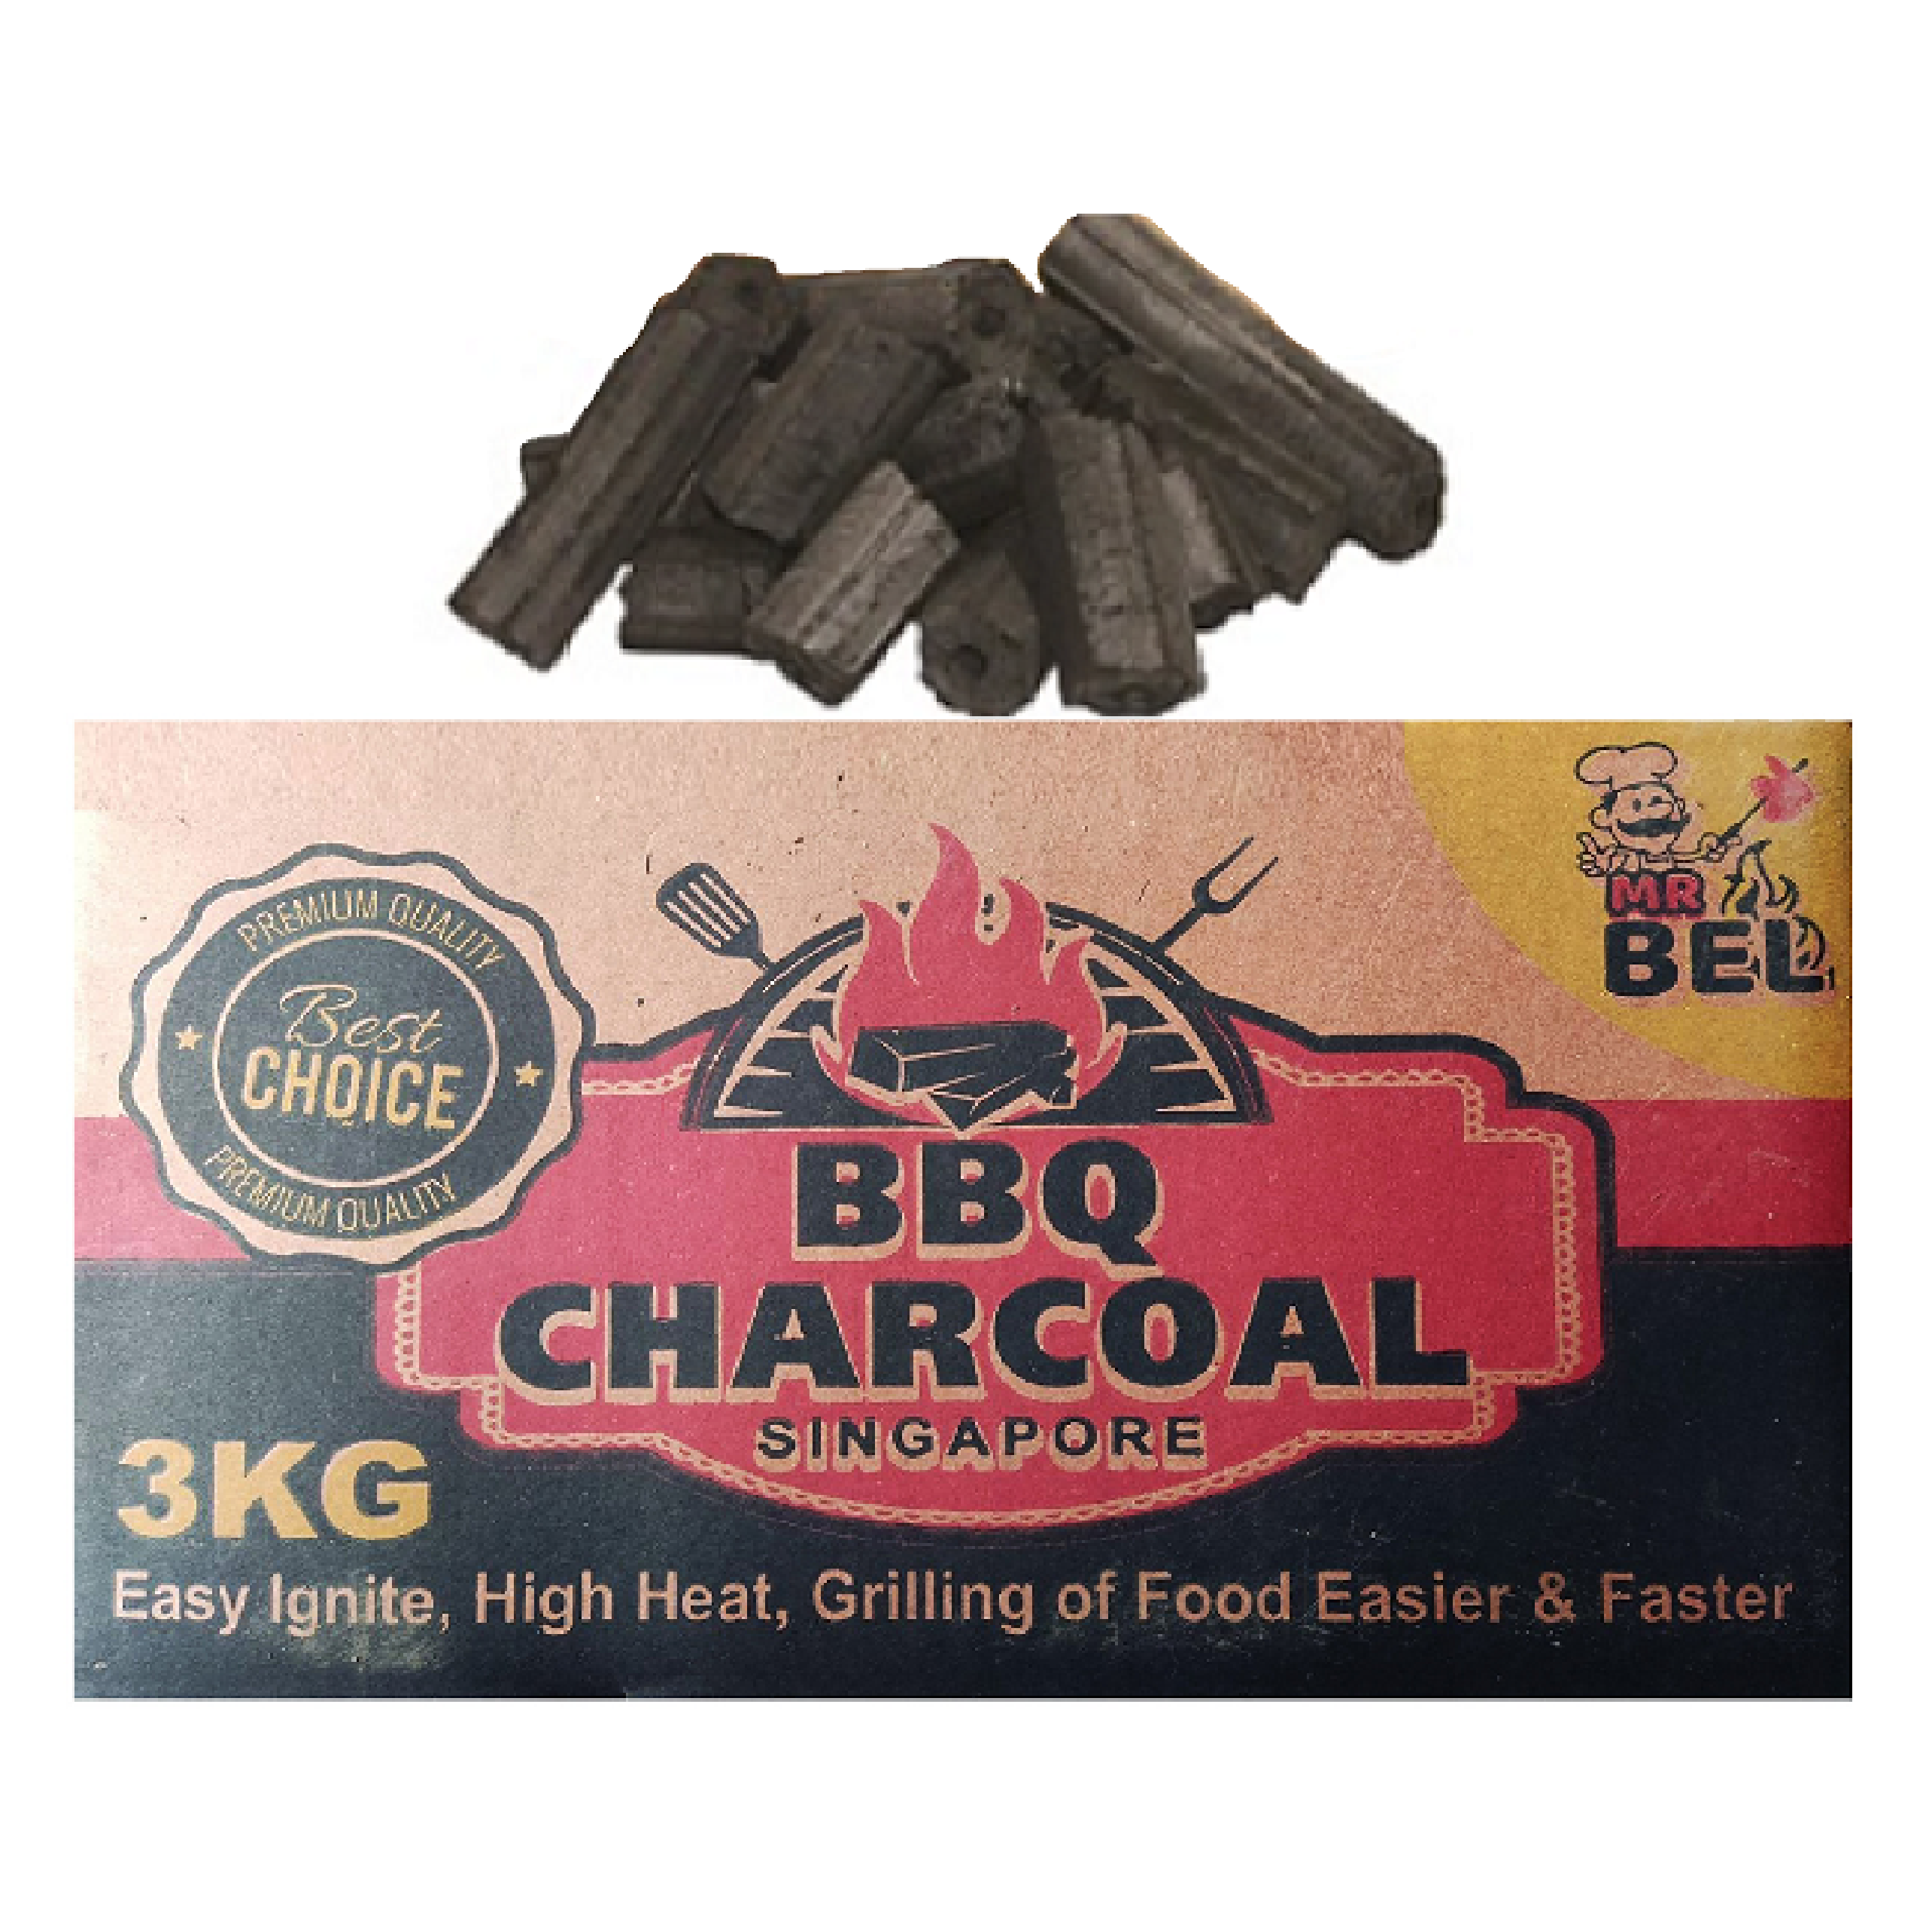 Mr Bel BBQ Charcoal 3KG